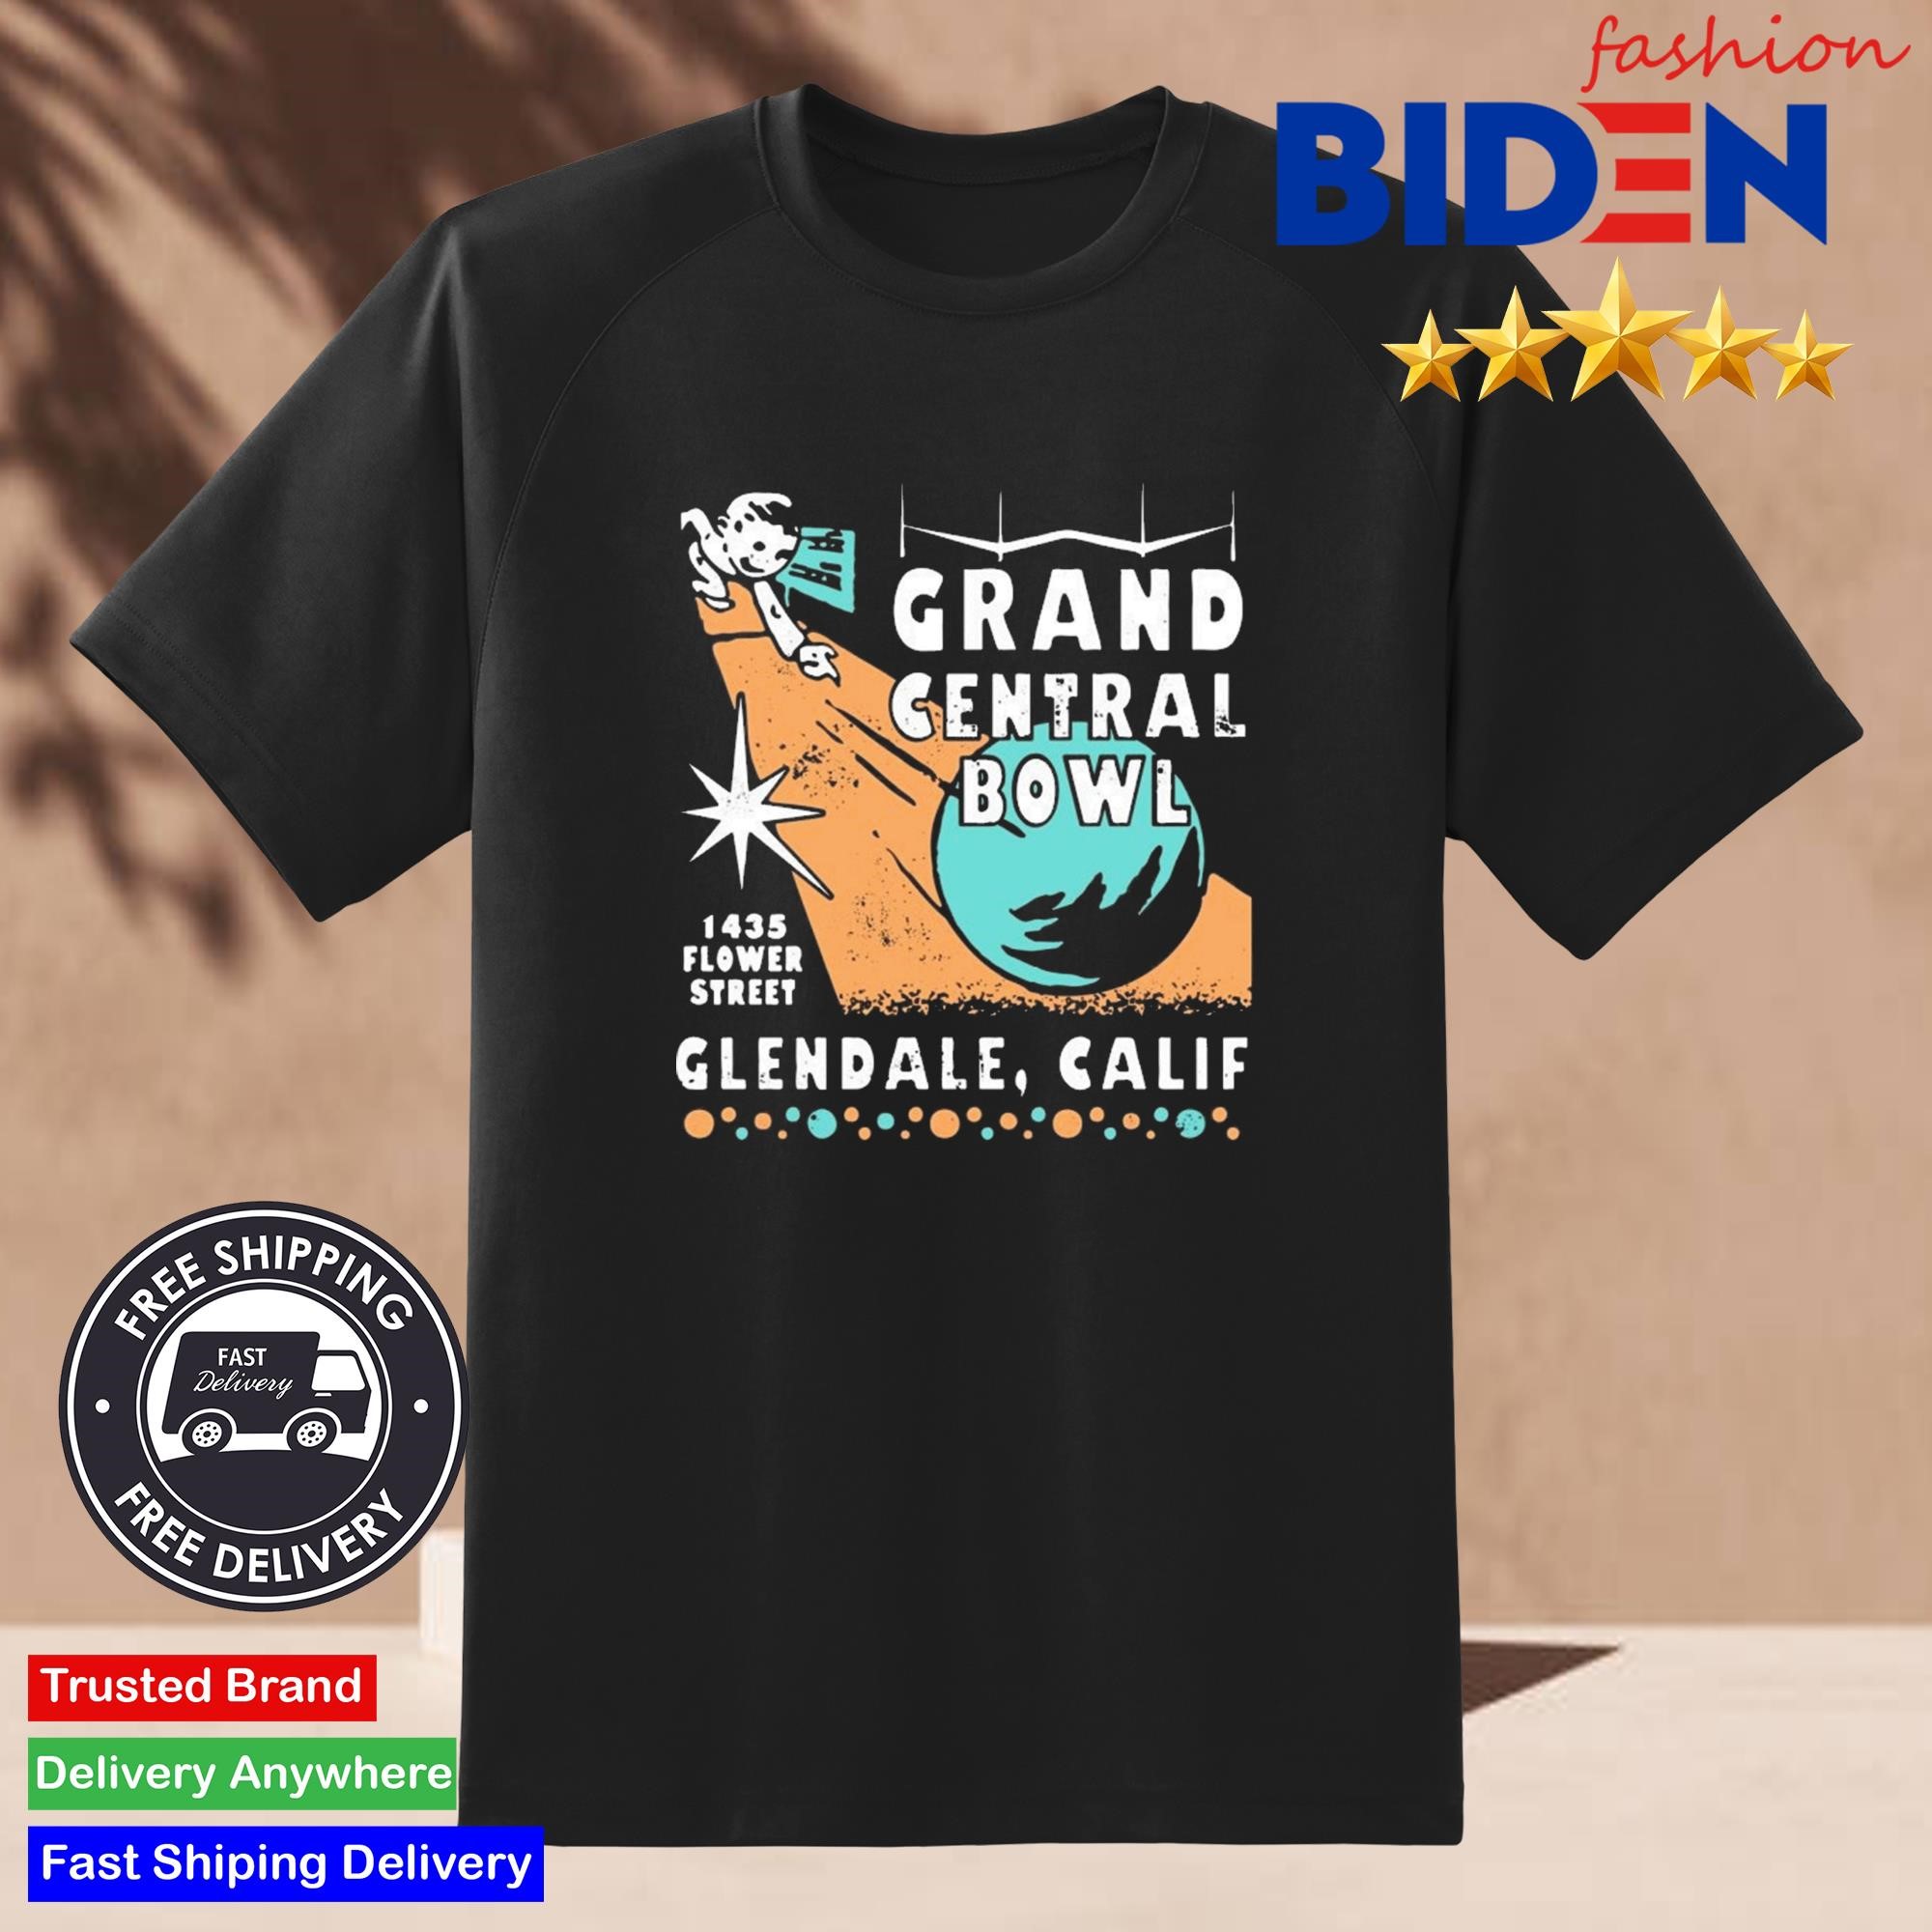 Grand Central Bowl - Glendale, CA - Vintage Bowling Alley Shirt